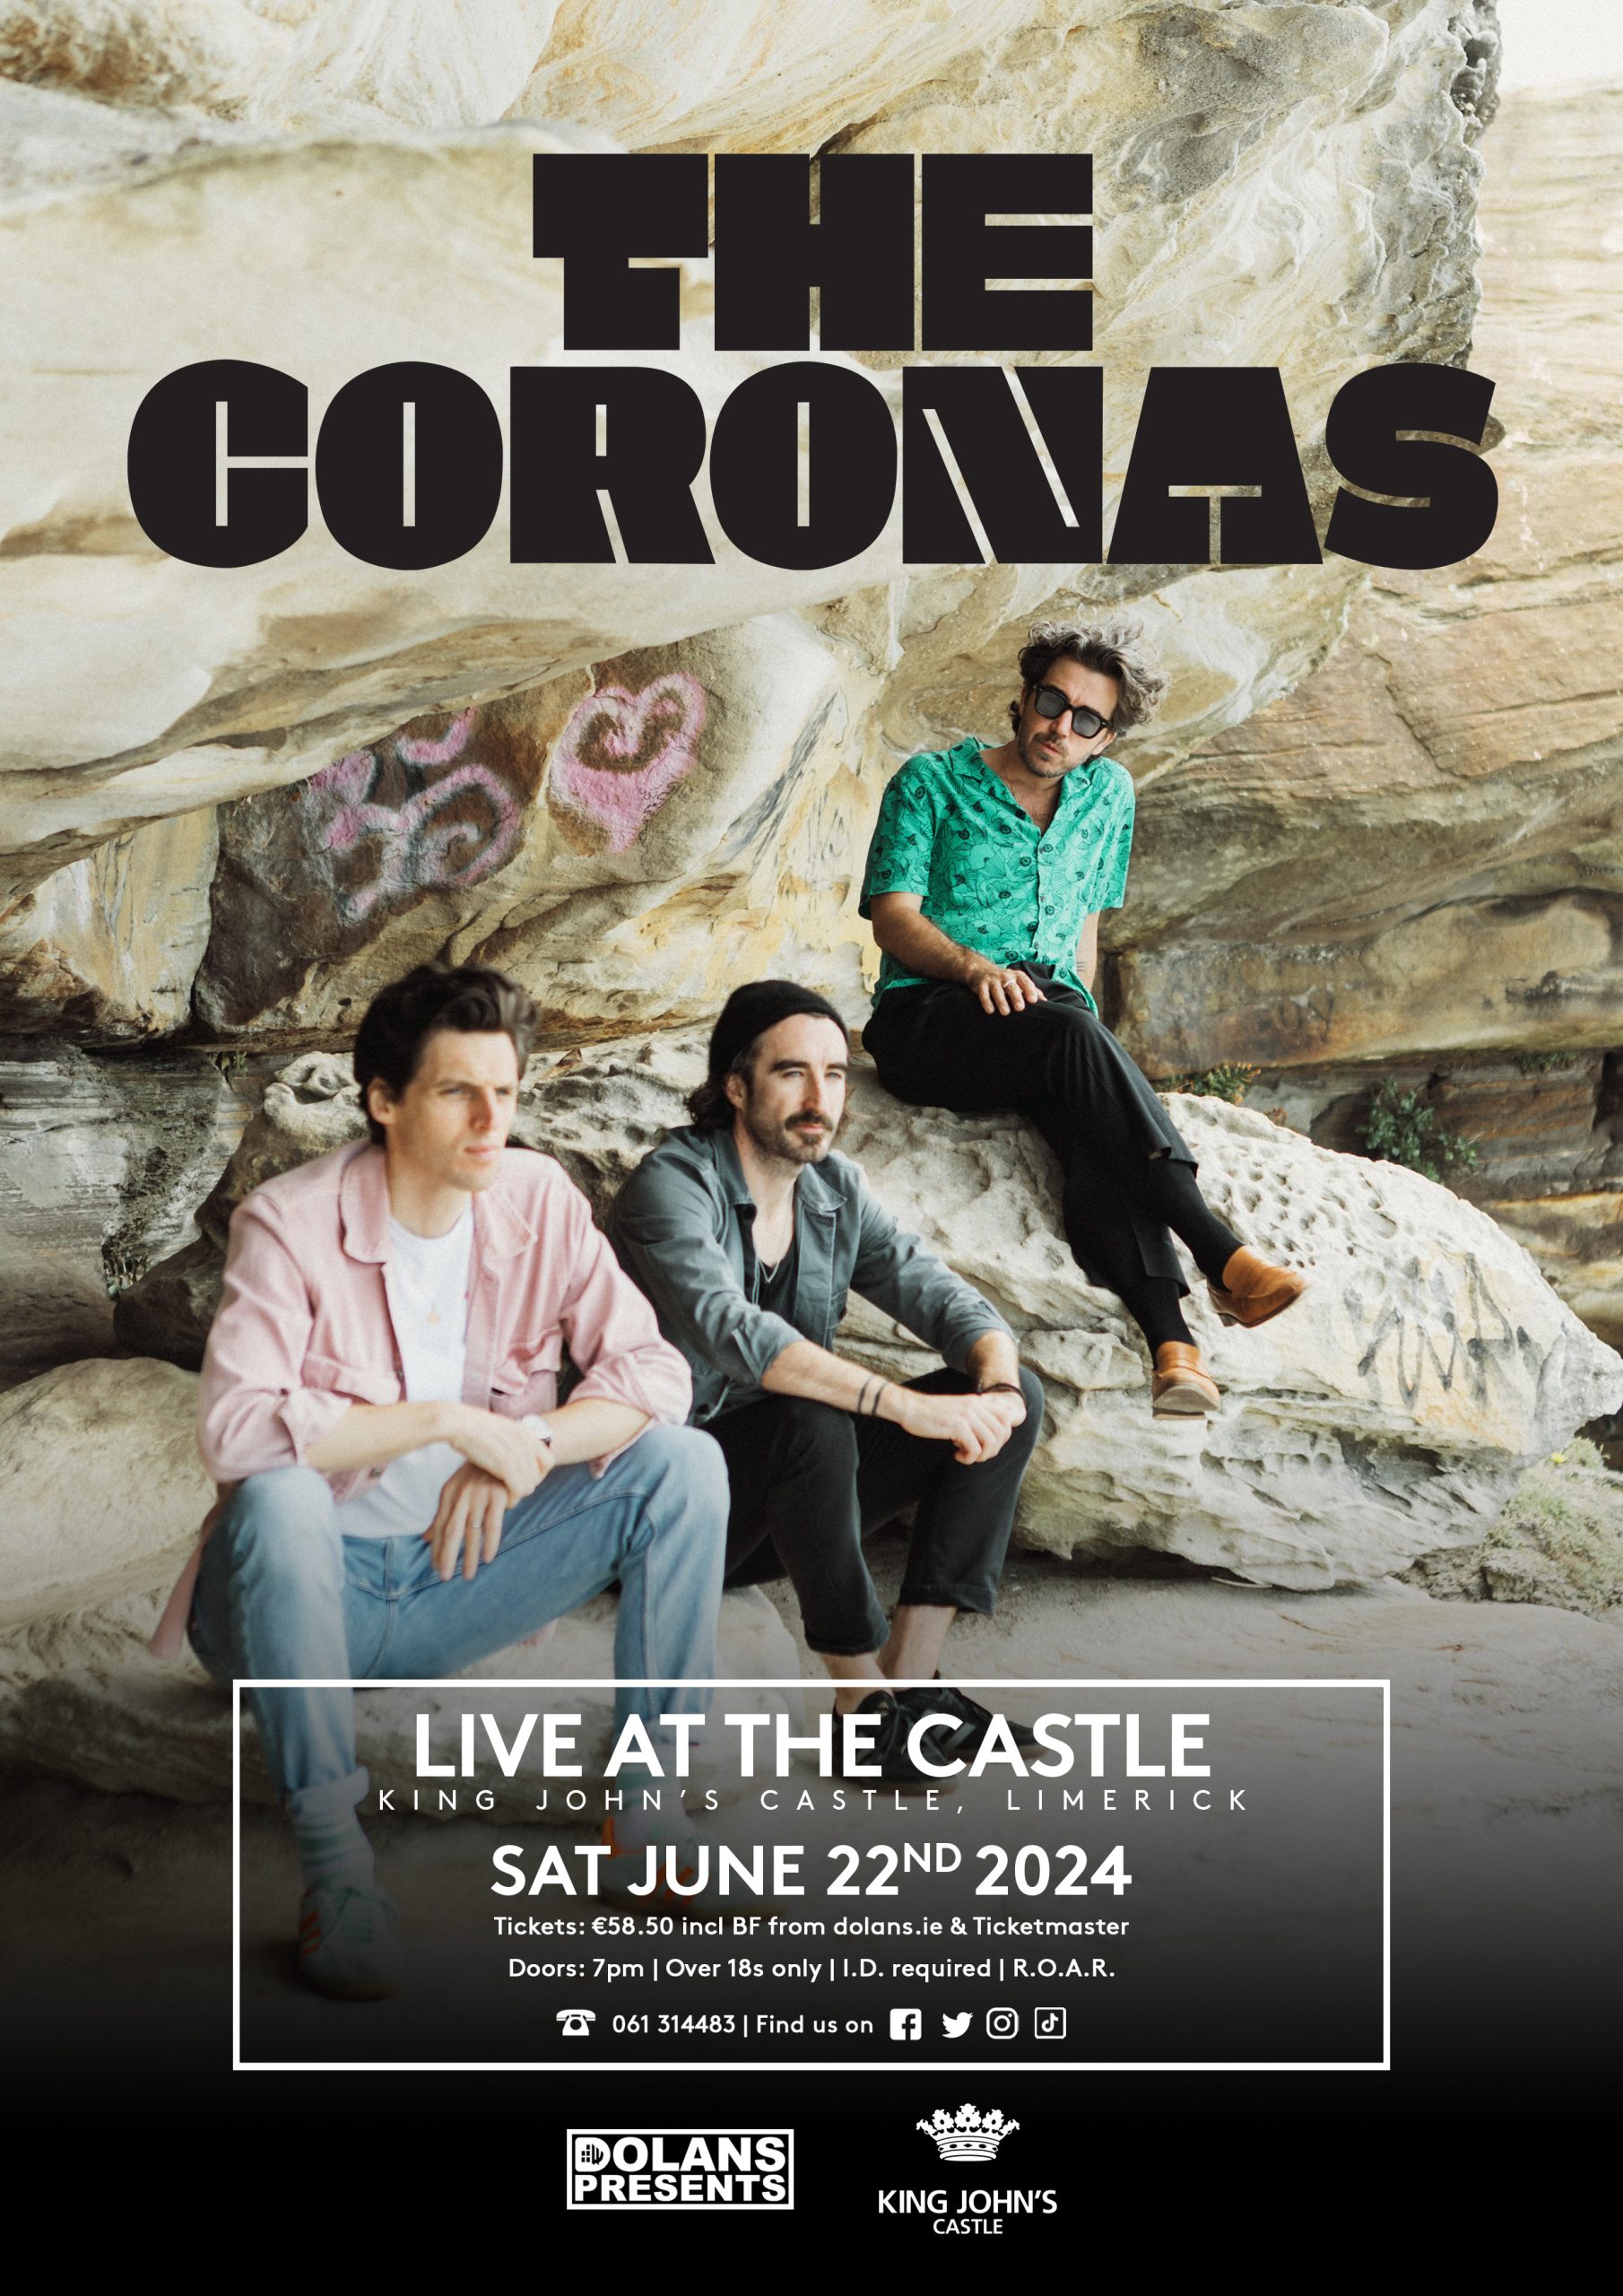 The coronas band promo image